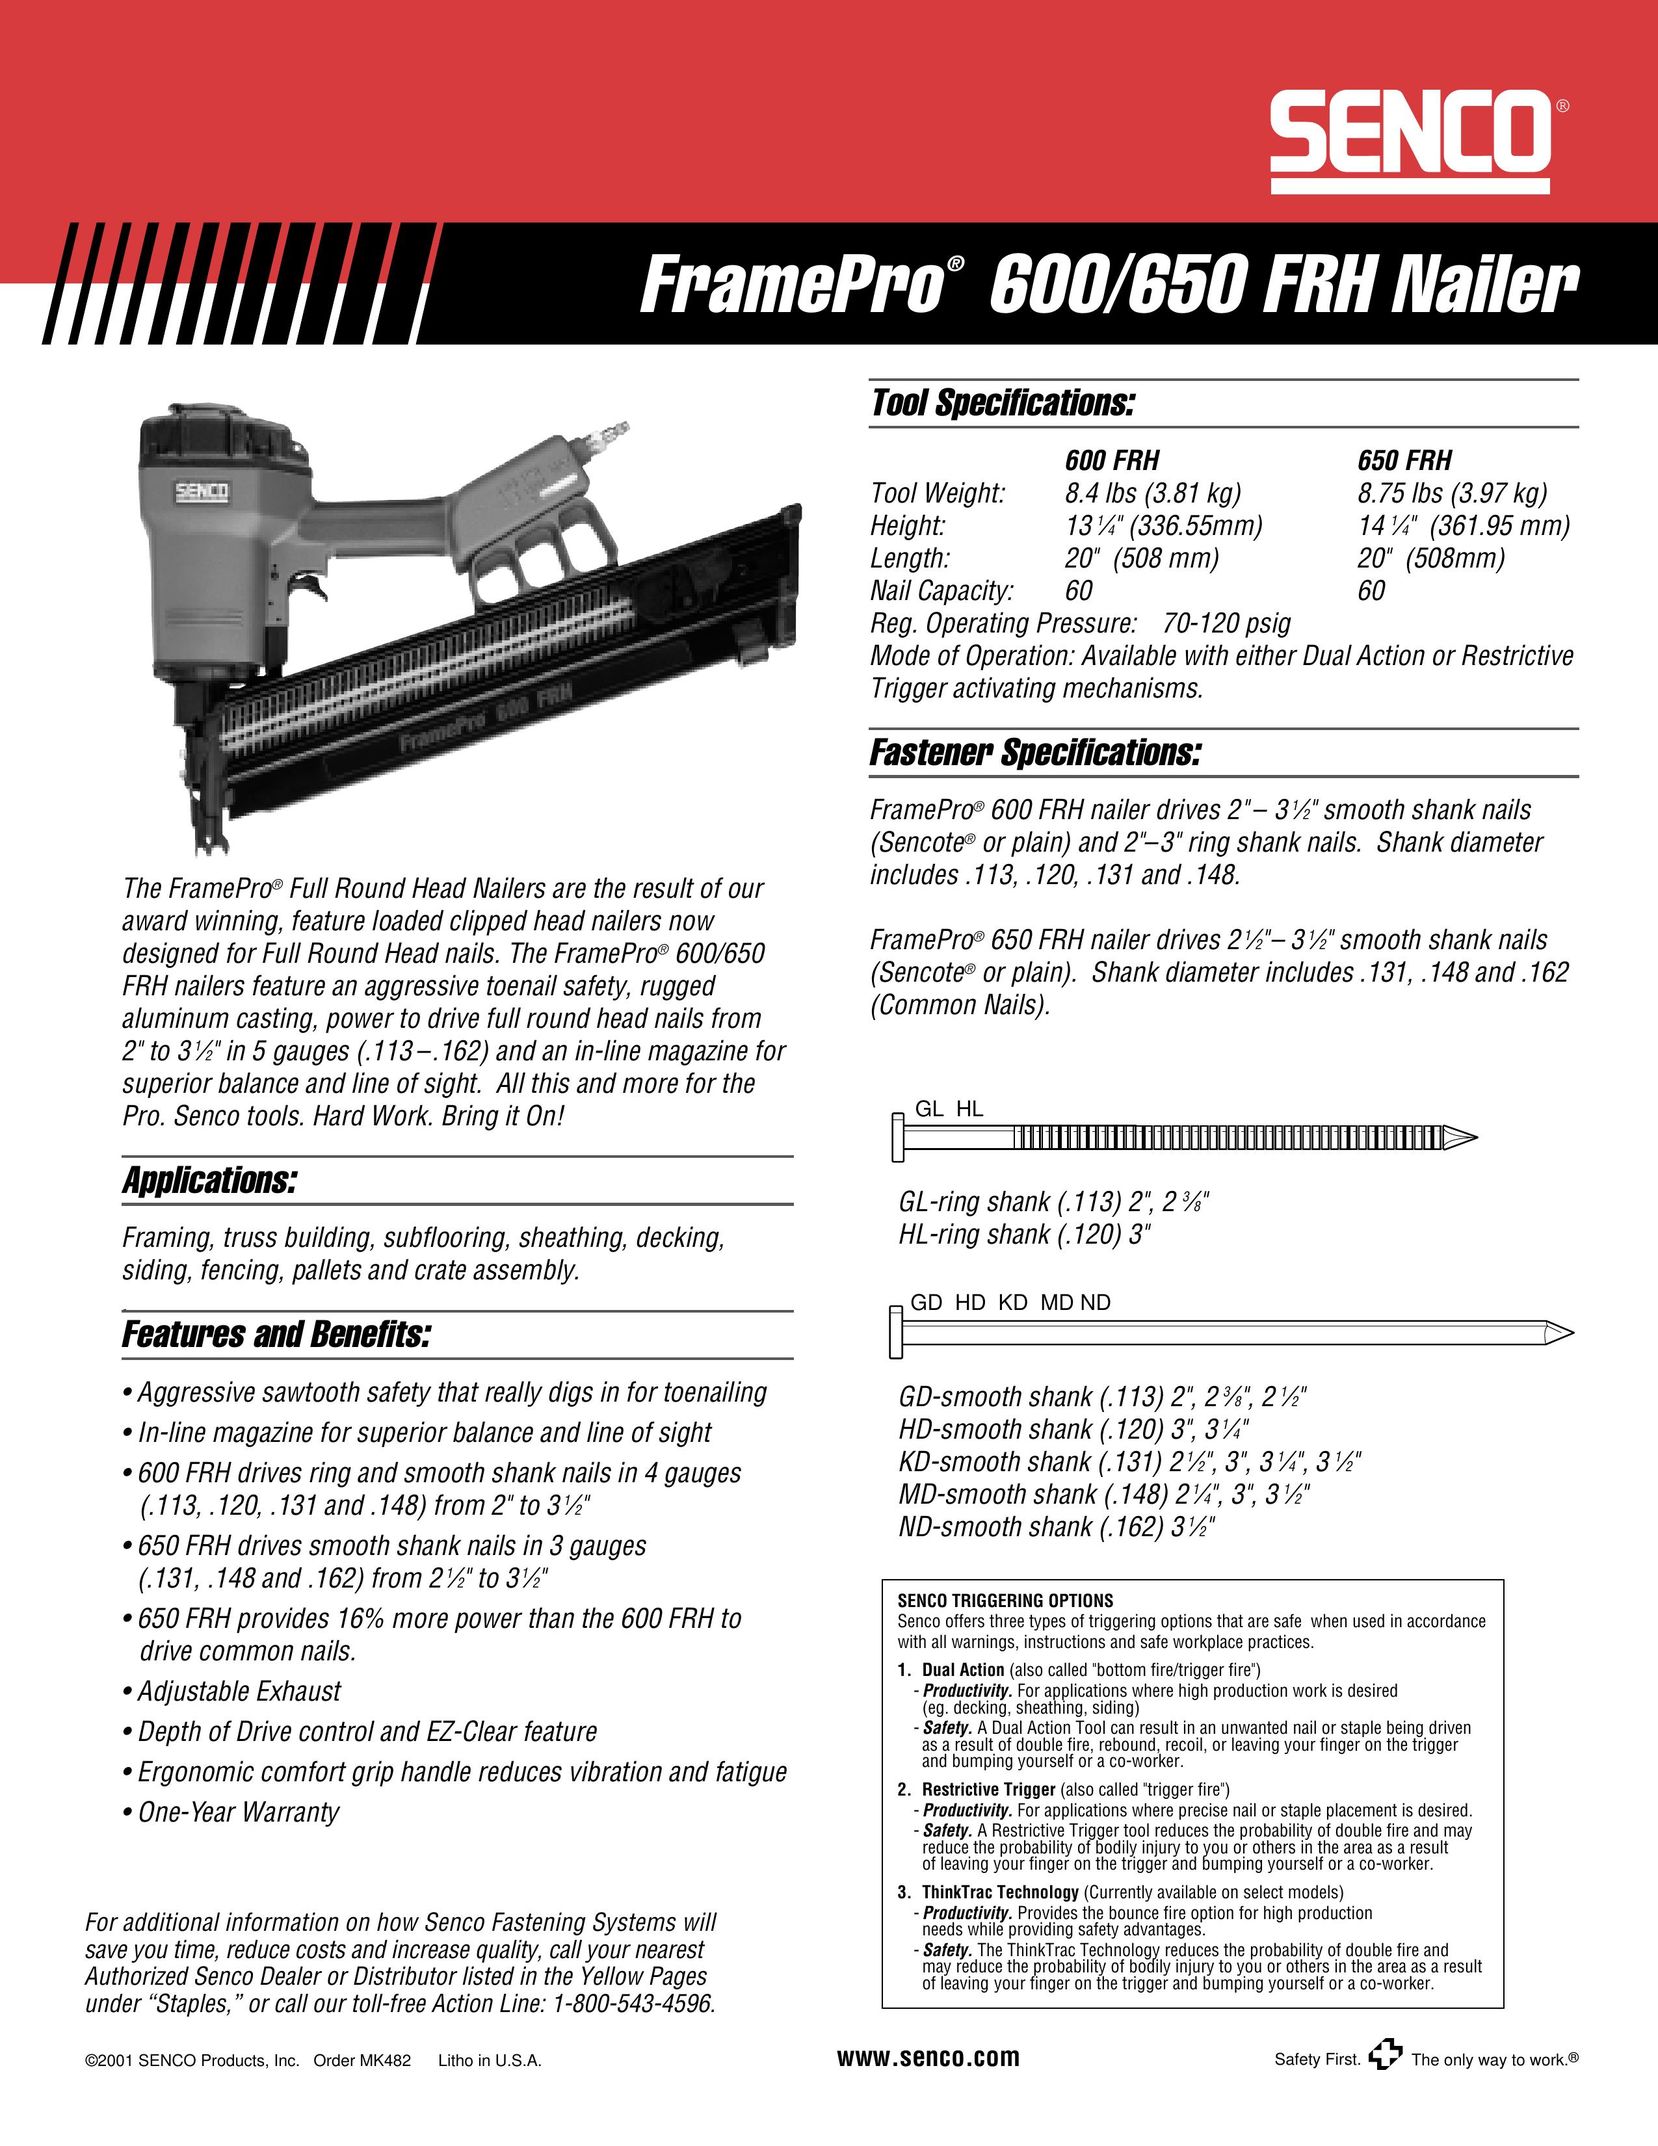 Senco 600 FRH Nail Gun User Manual